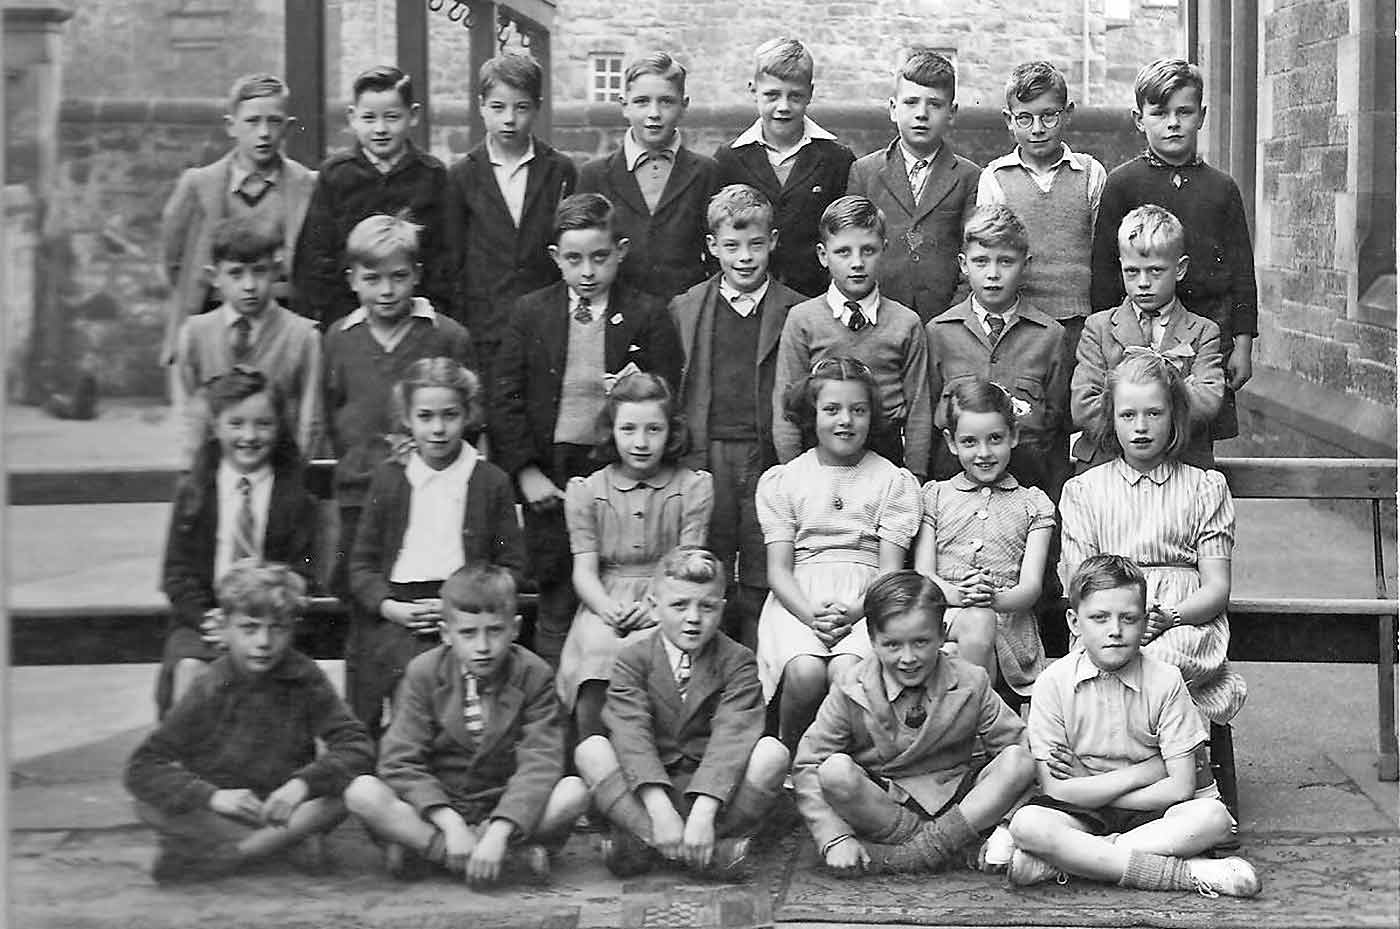 Dean Village Primary School Photo - 1940s